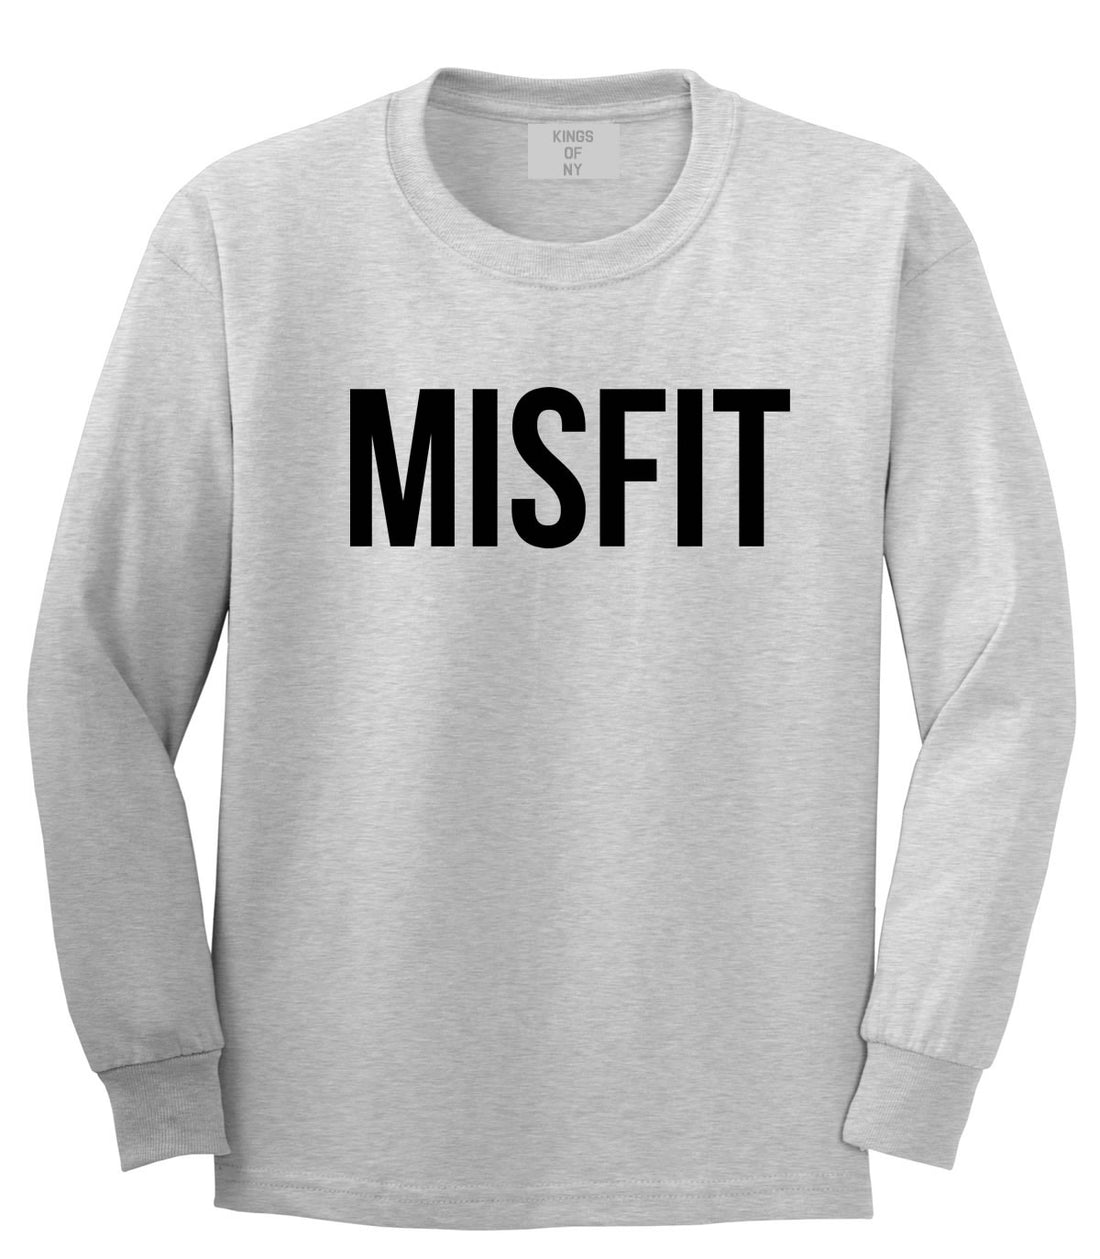 Kings Of NY Misfit Long Sleeve T-Shirt in Grey